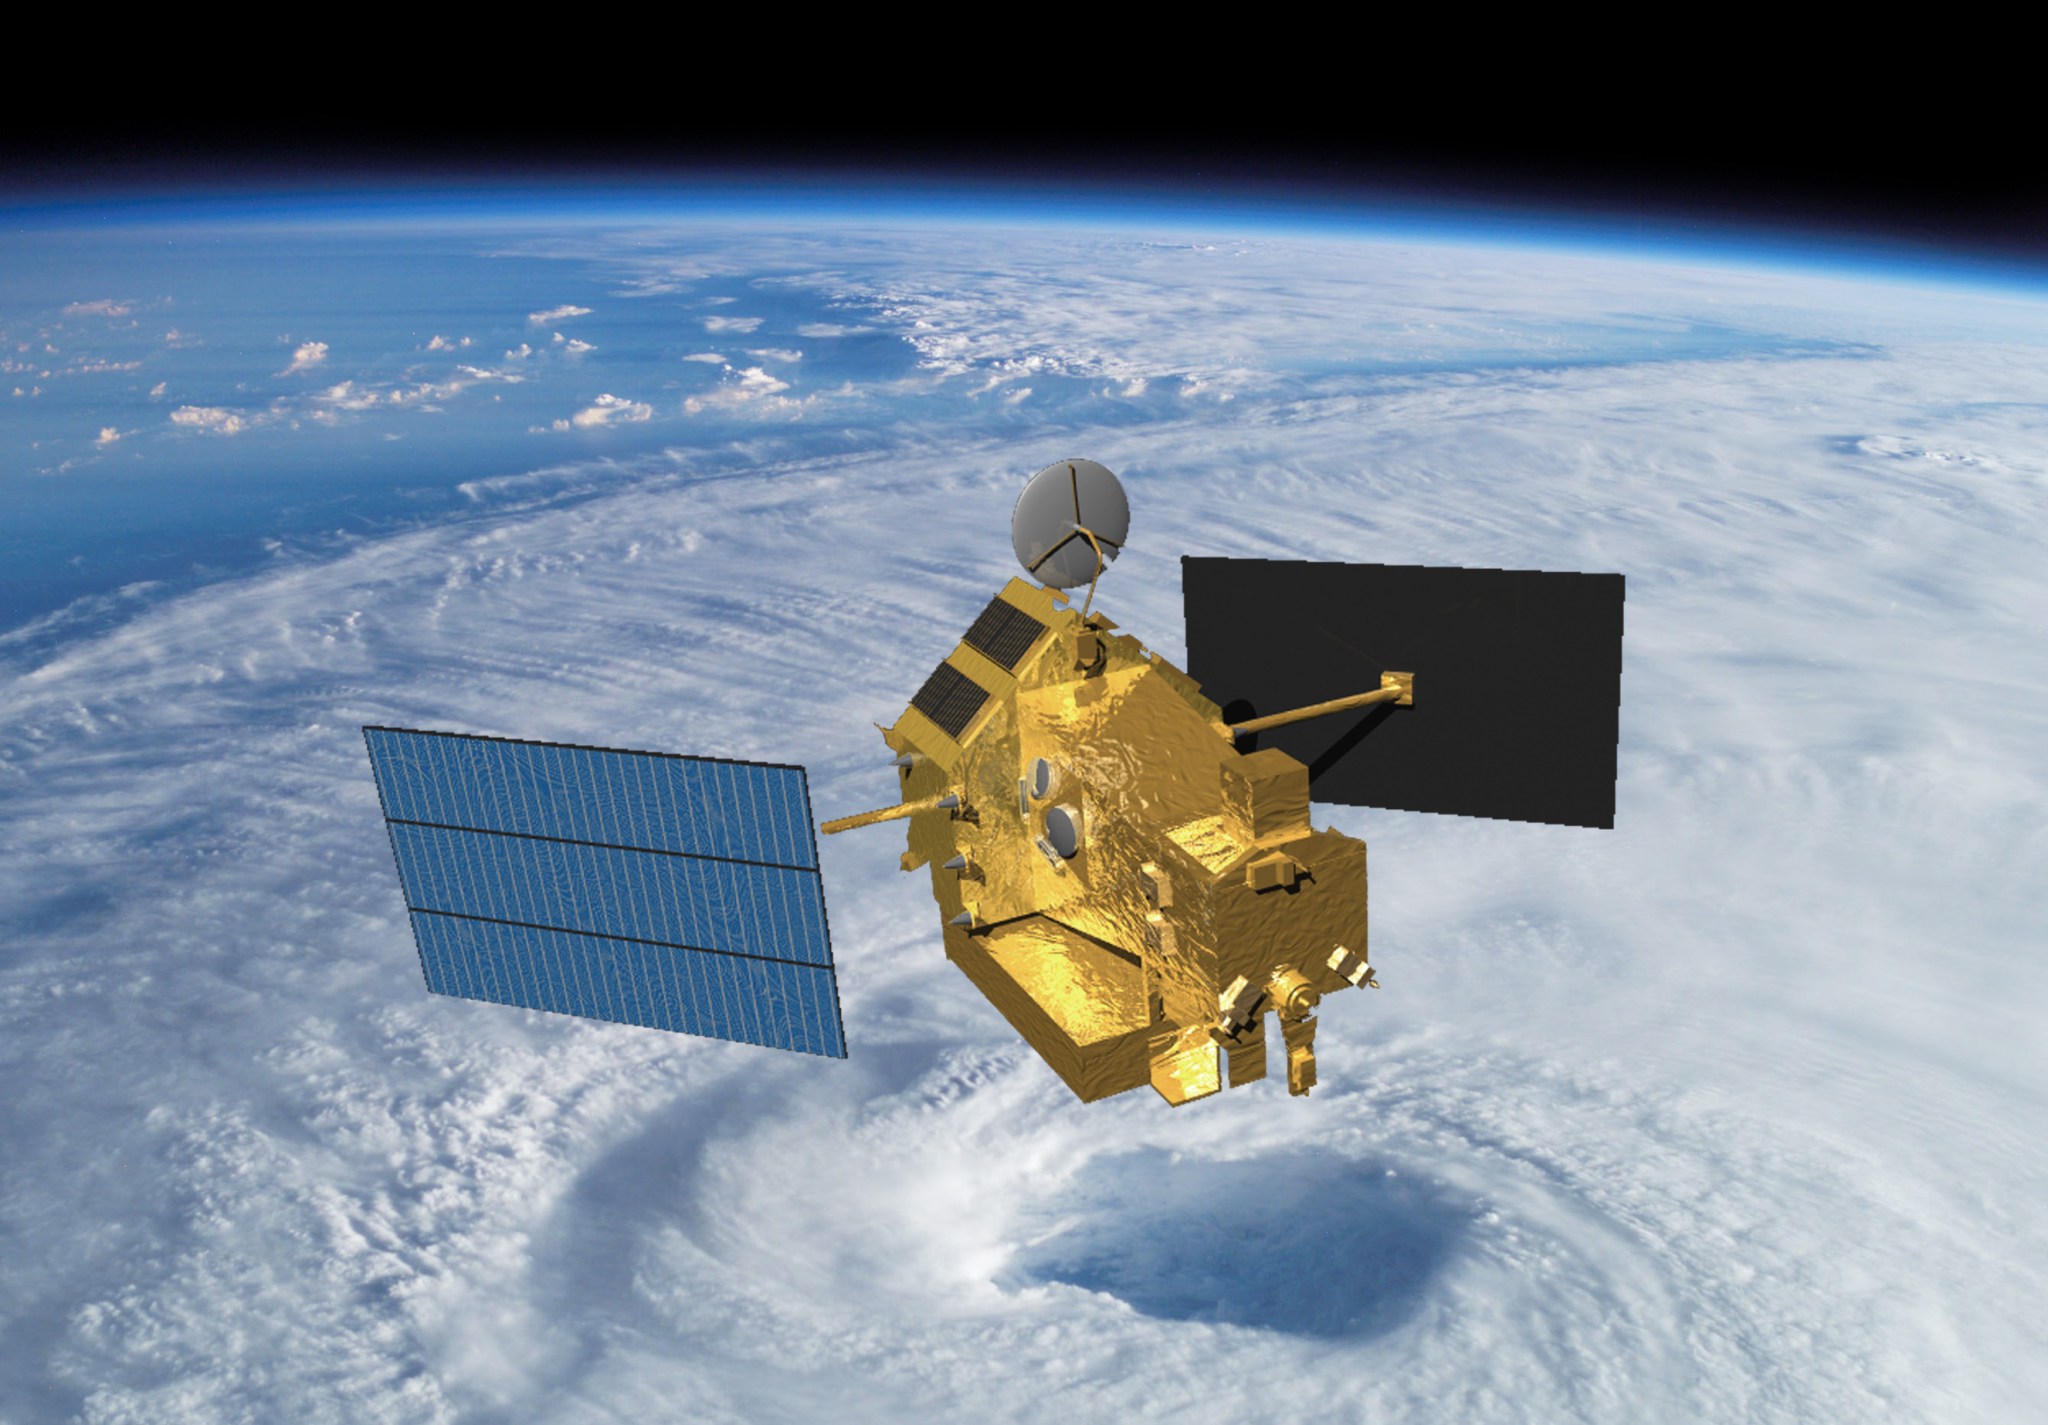 The TRMM satellite orbits over a hurricane eyewall